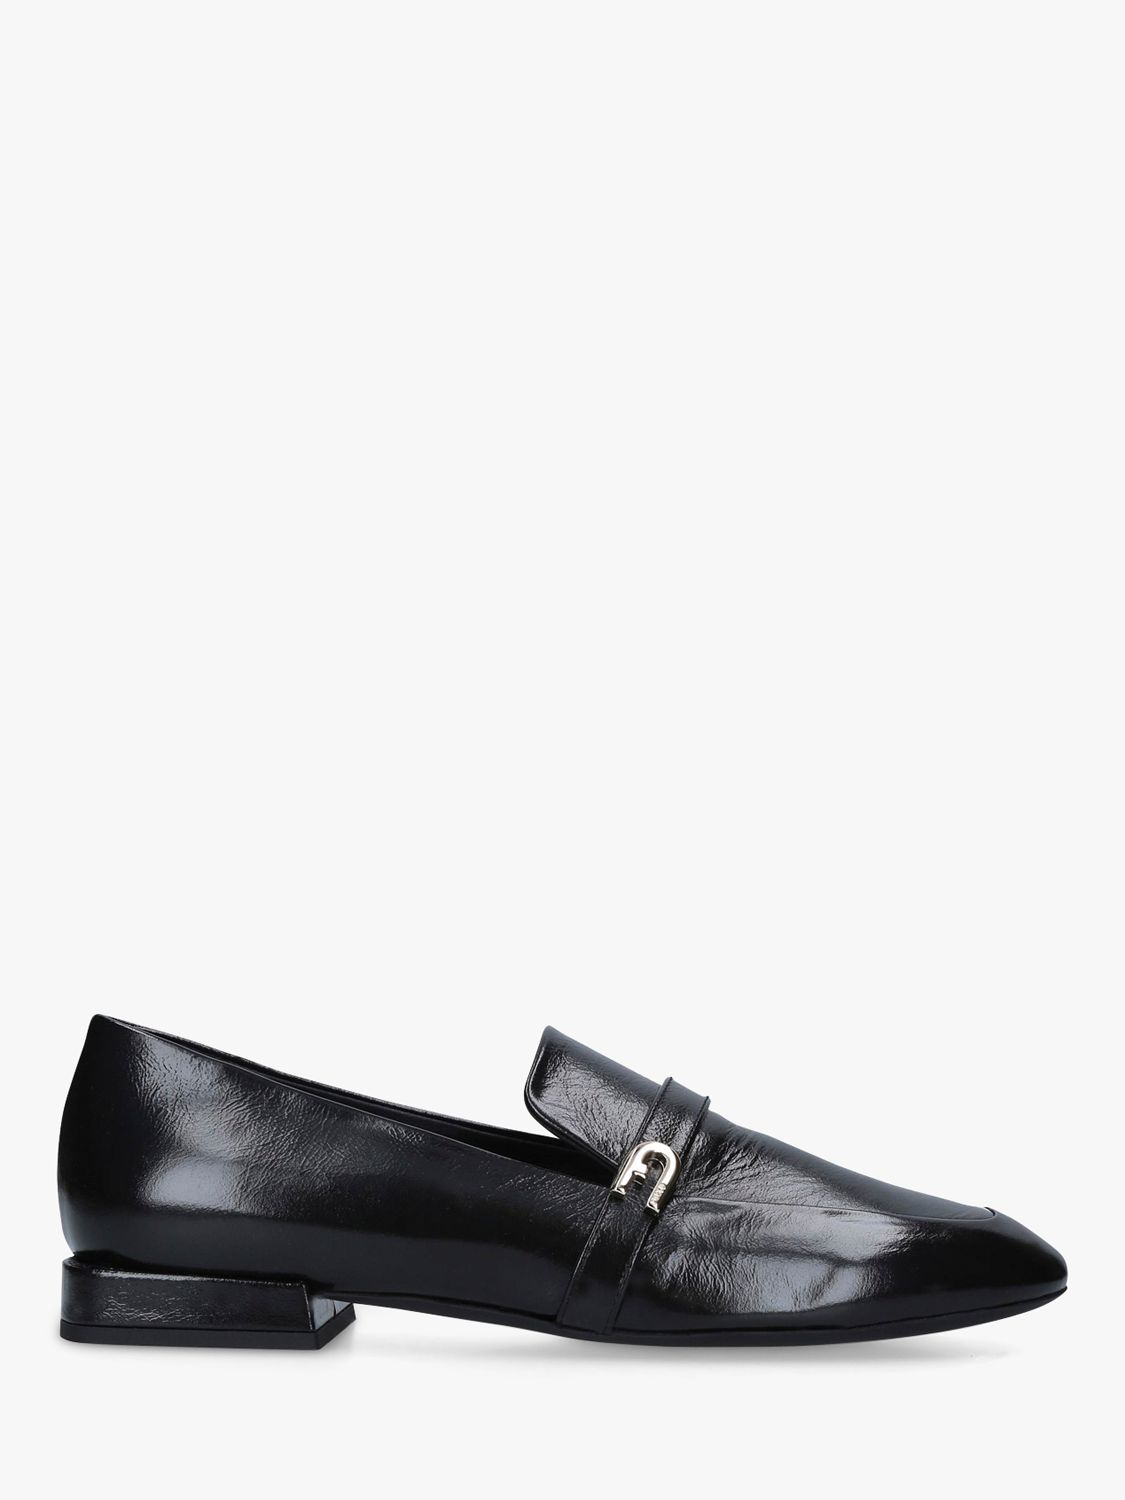 Furla 1927 Leather Loafers, Black